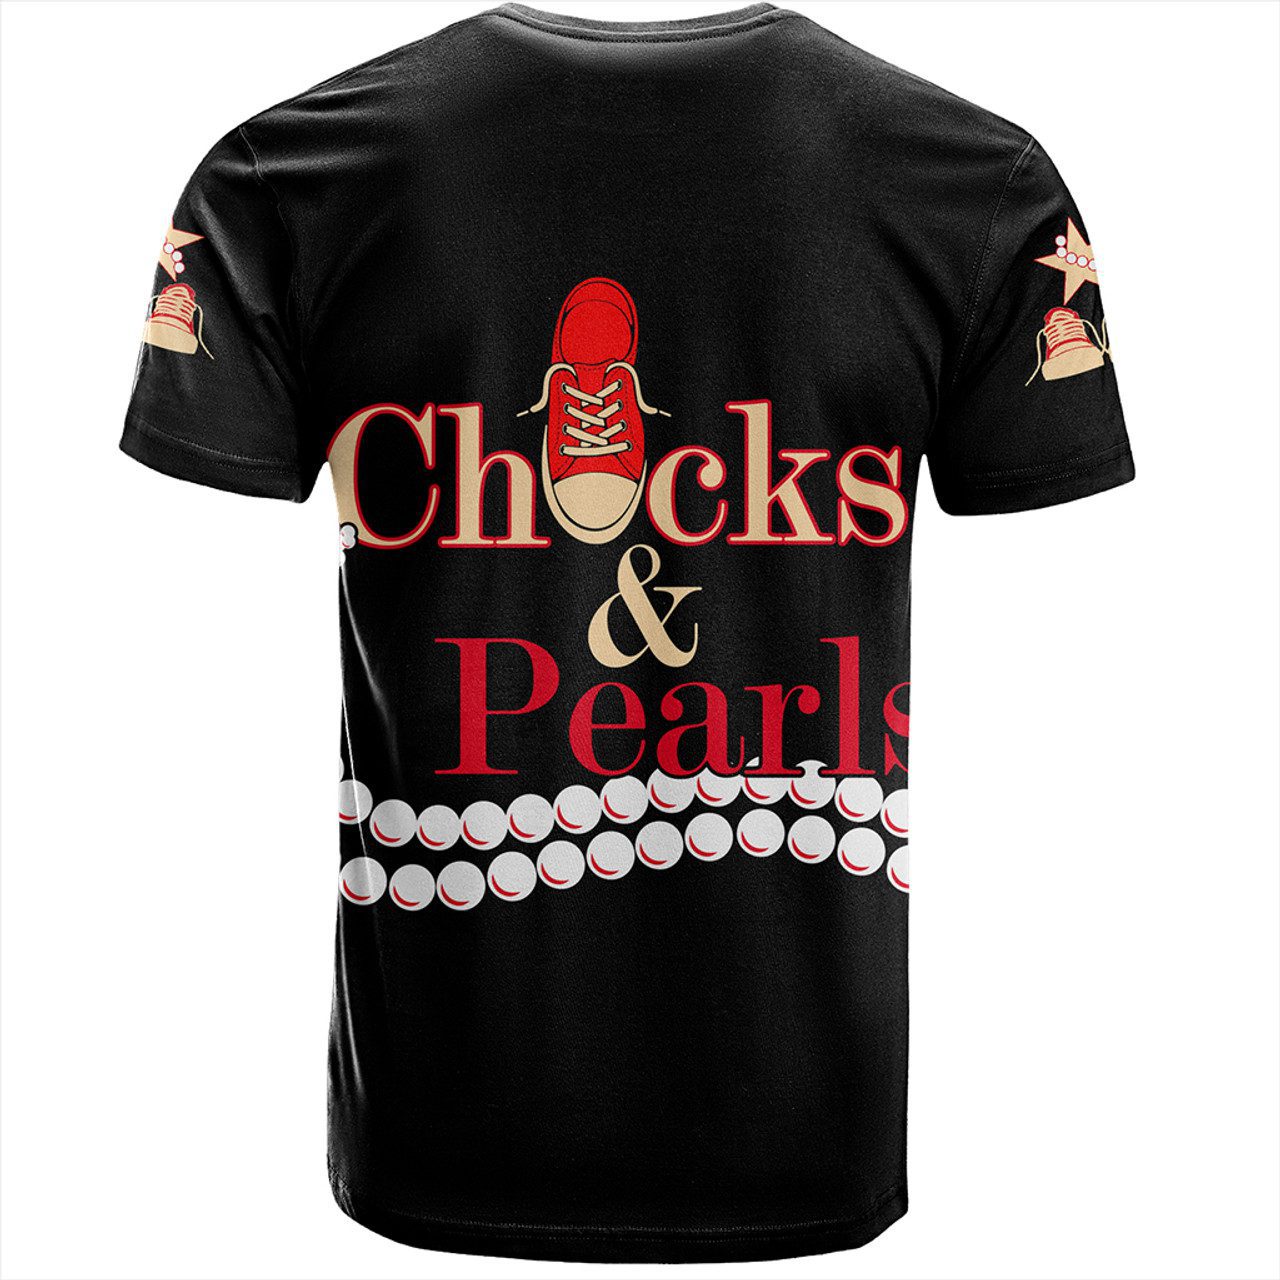 Delta Sigma Theta T-Shirt K.H Chuck And Pearls